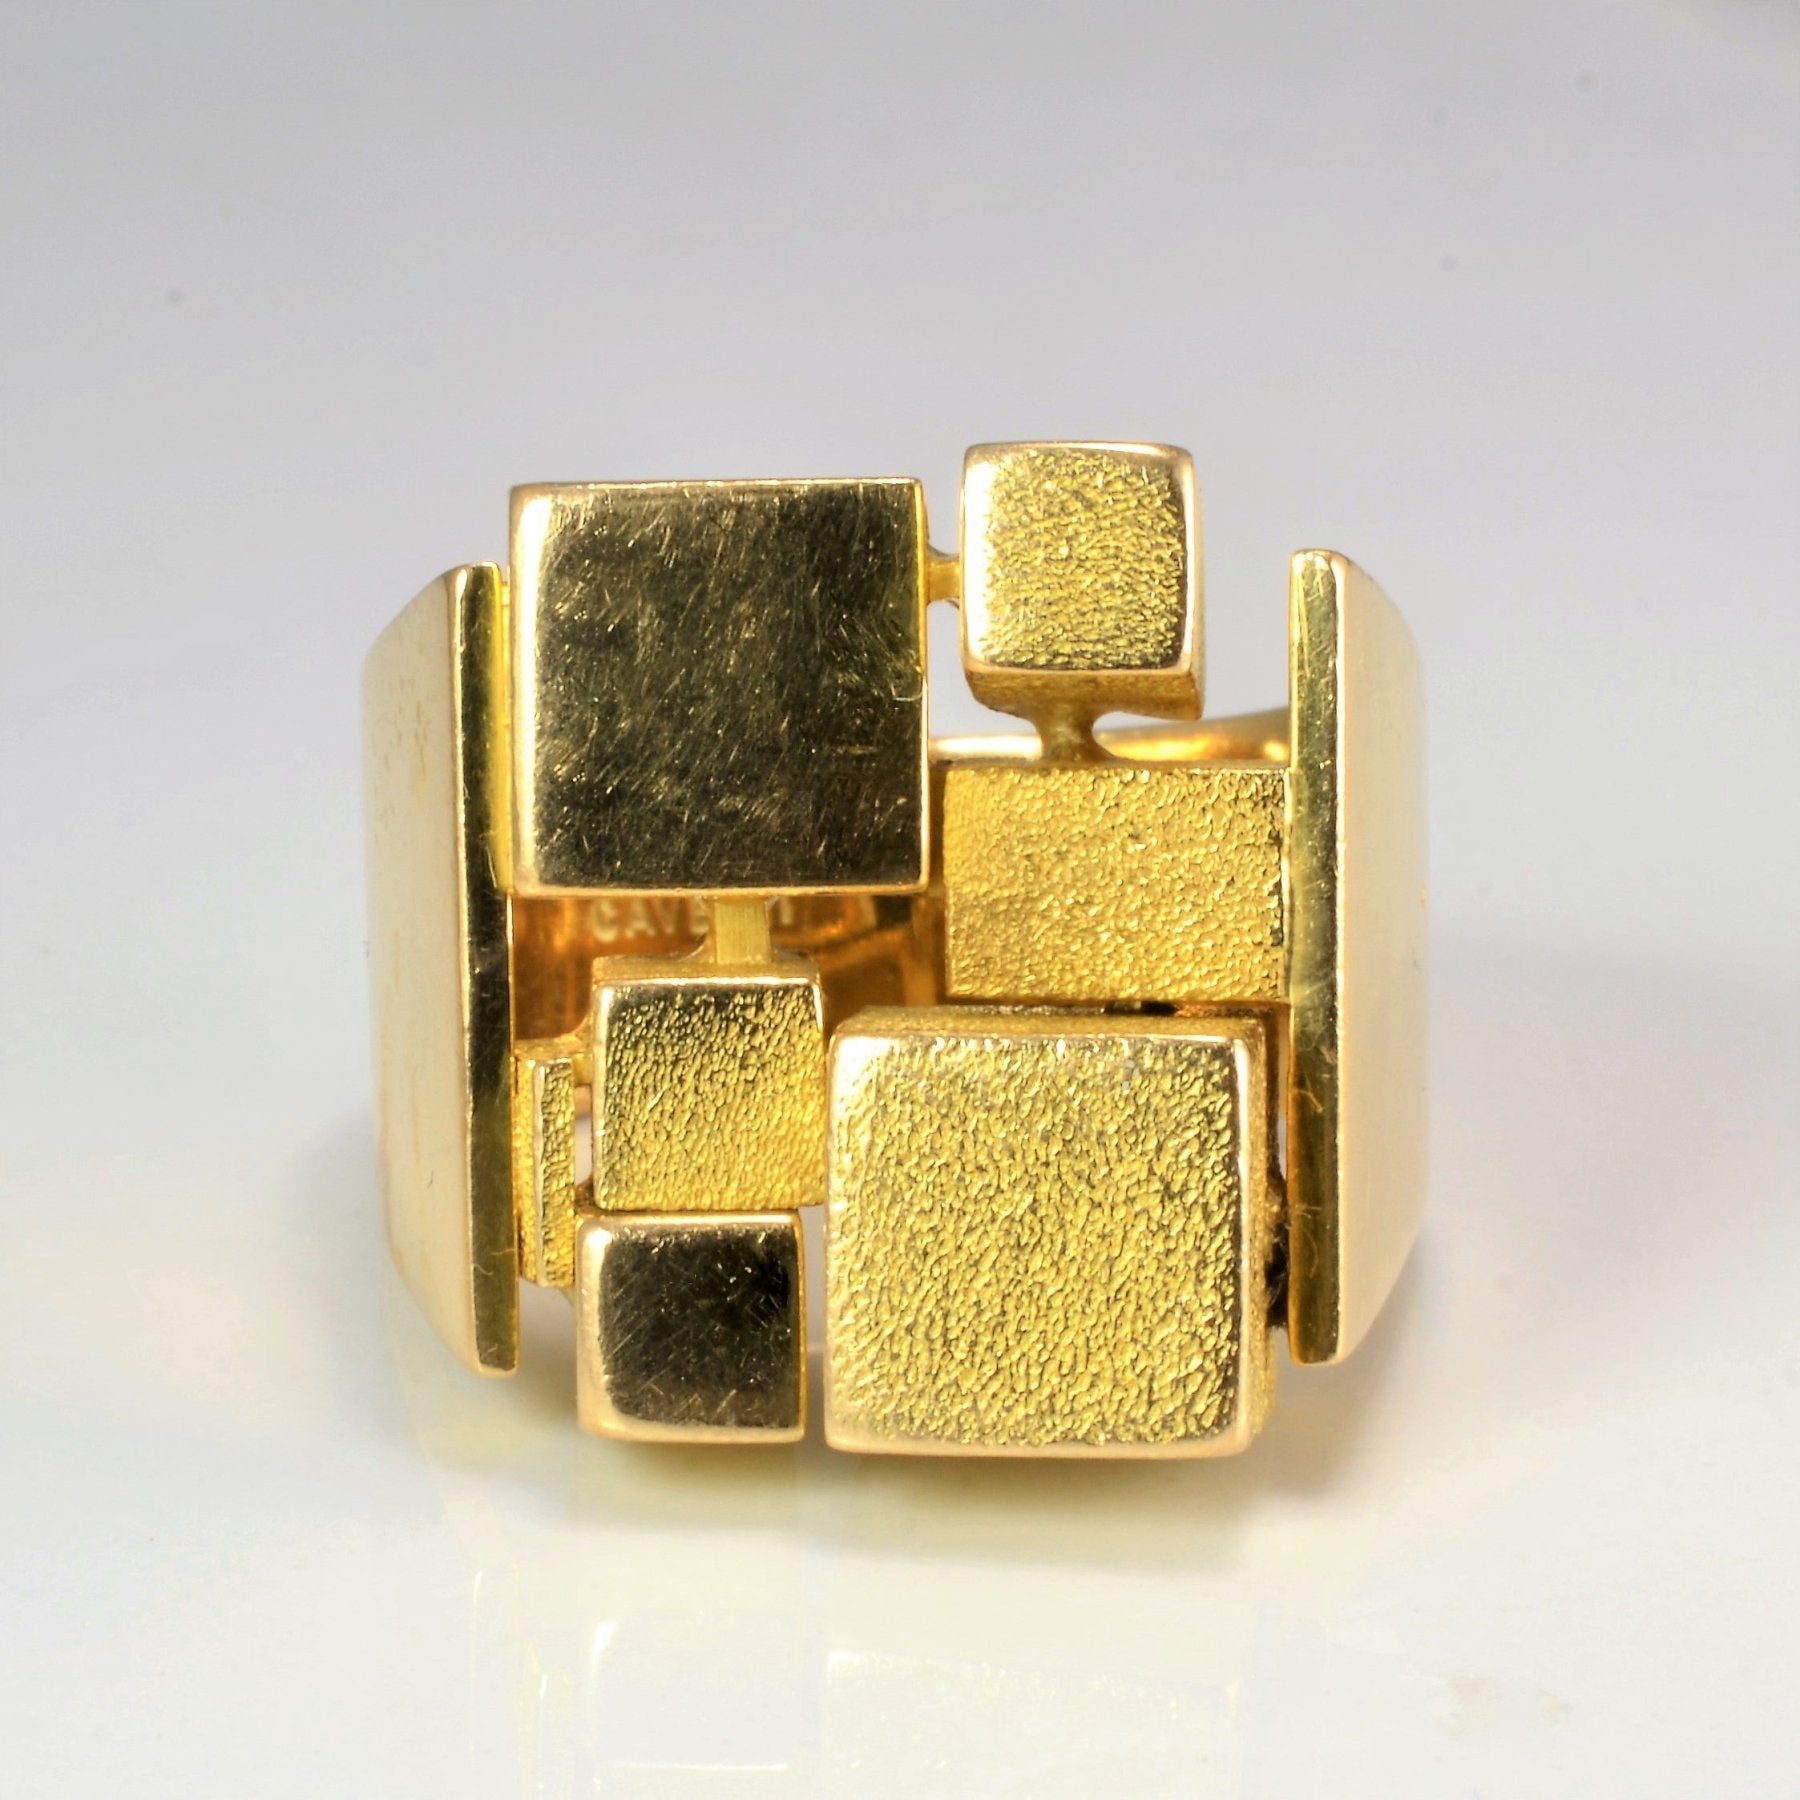 'Cavelti' Textured Gold Heavy Ring | SZ 10.25 | - 100 Ways